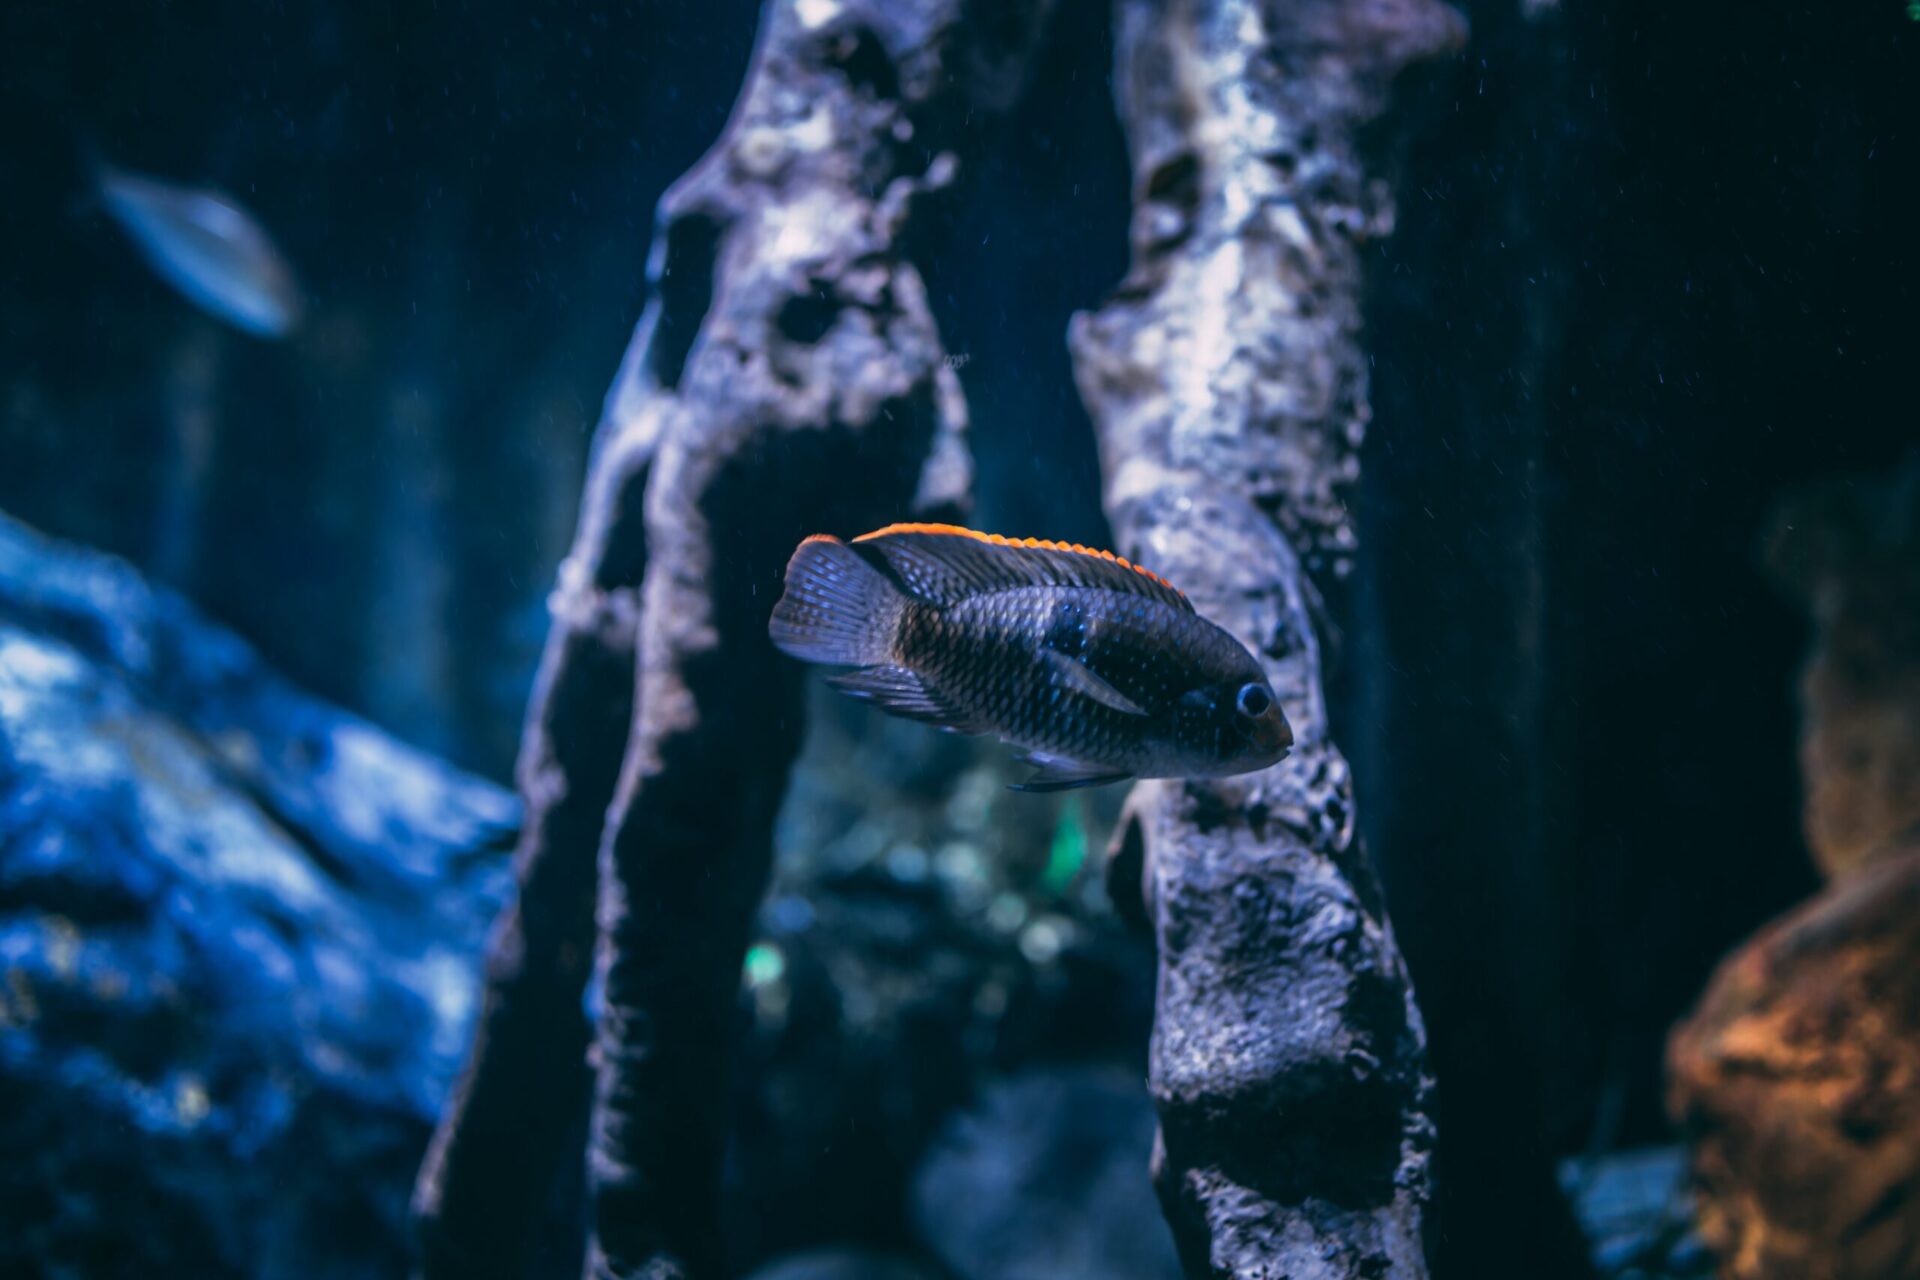 Close up of a quarantine fish